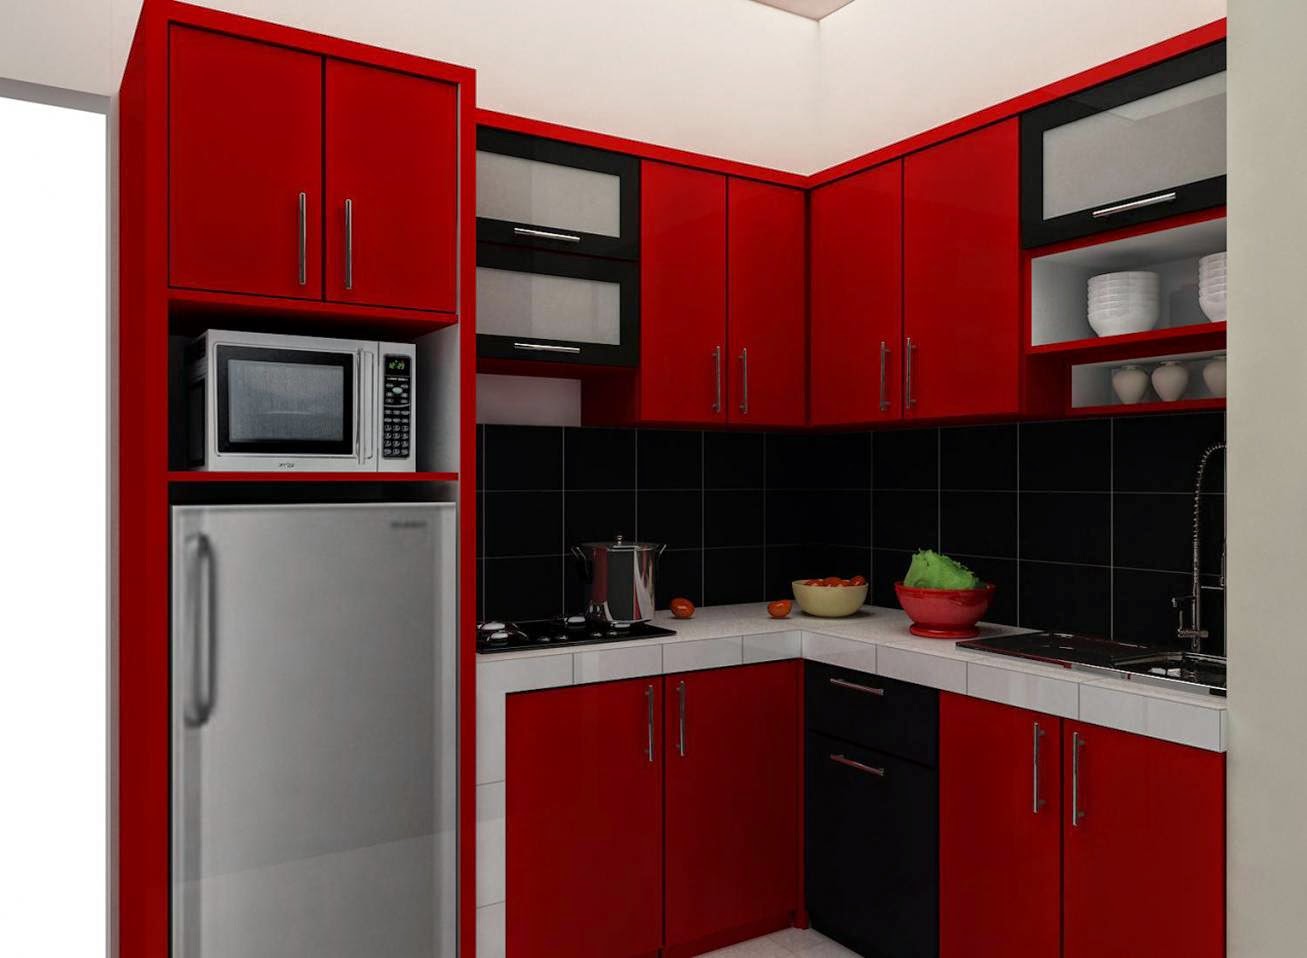 Desain Interior Dapur Rumah Minimalis | Rumah Minimalis ...